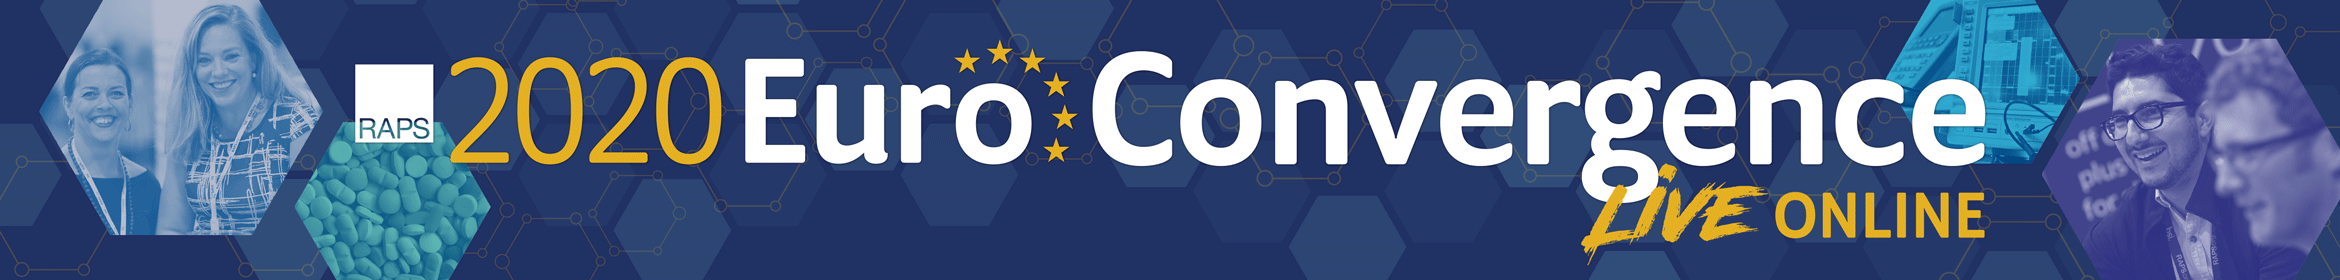 RAPS Euro Convergence 2020 Main banner